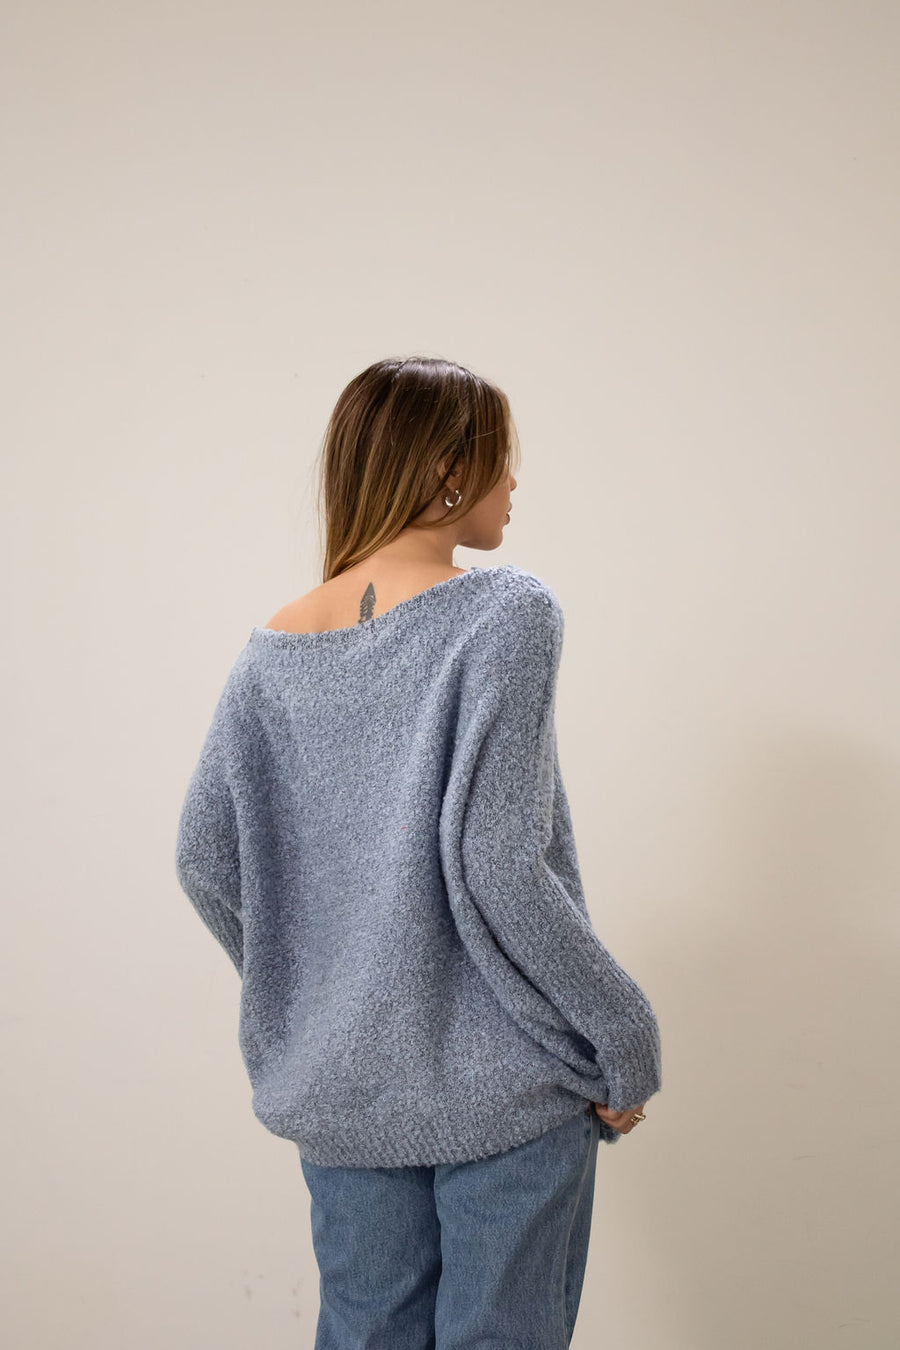 No Choice Sweater - FINAL SALE